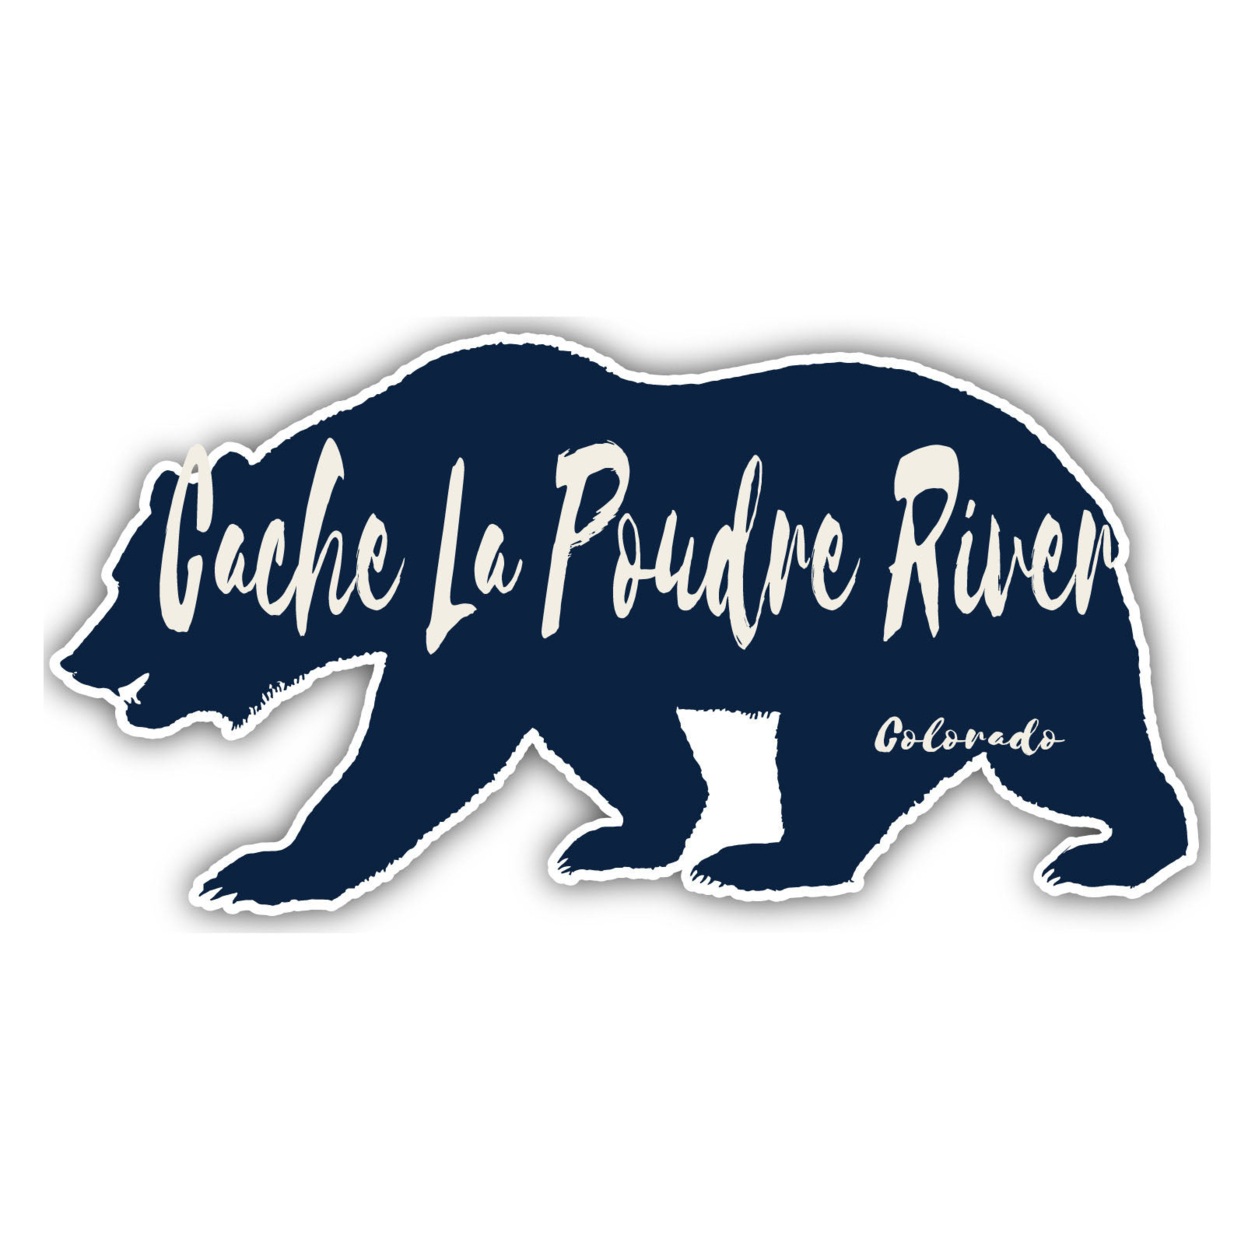 Cache La Poudre River Colorado Souvenir Decorative Stickers (Choose Theme And Size) - 4-Pack, 10-Inch, Tent